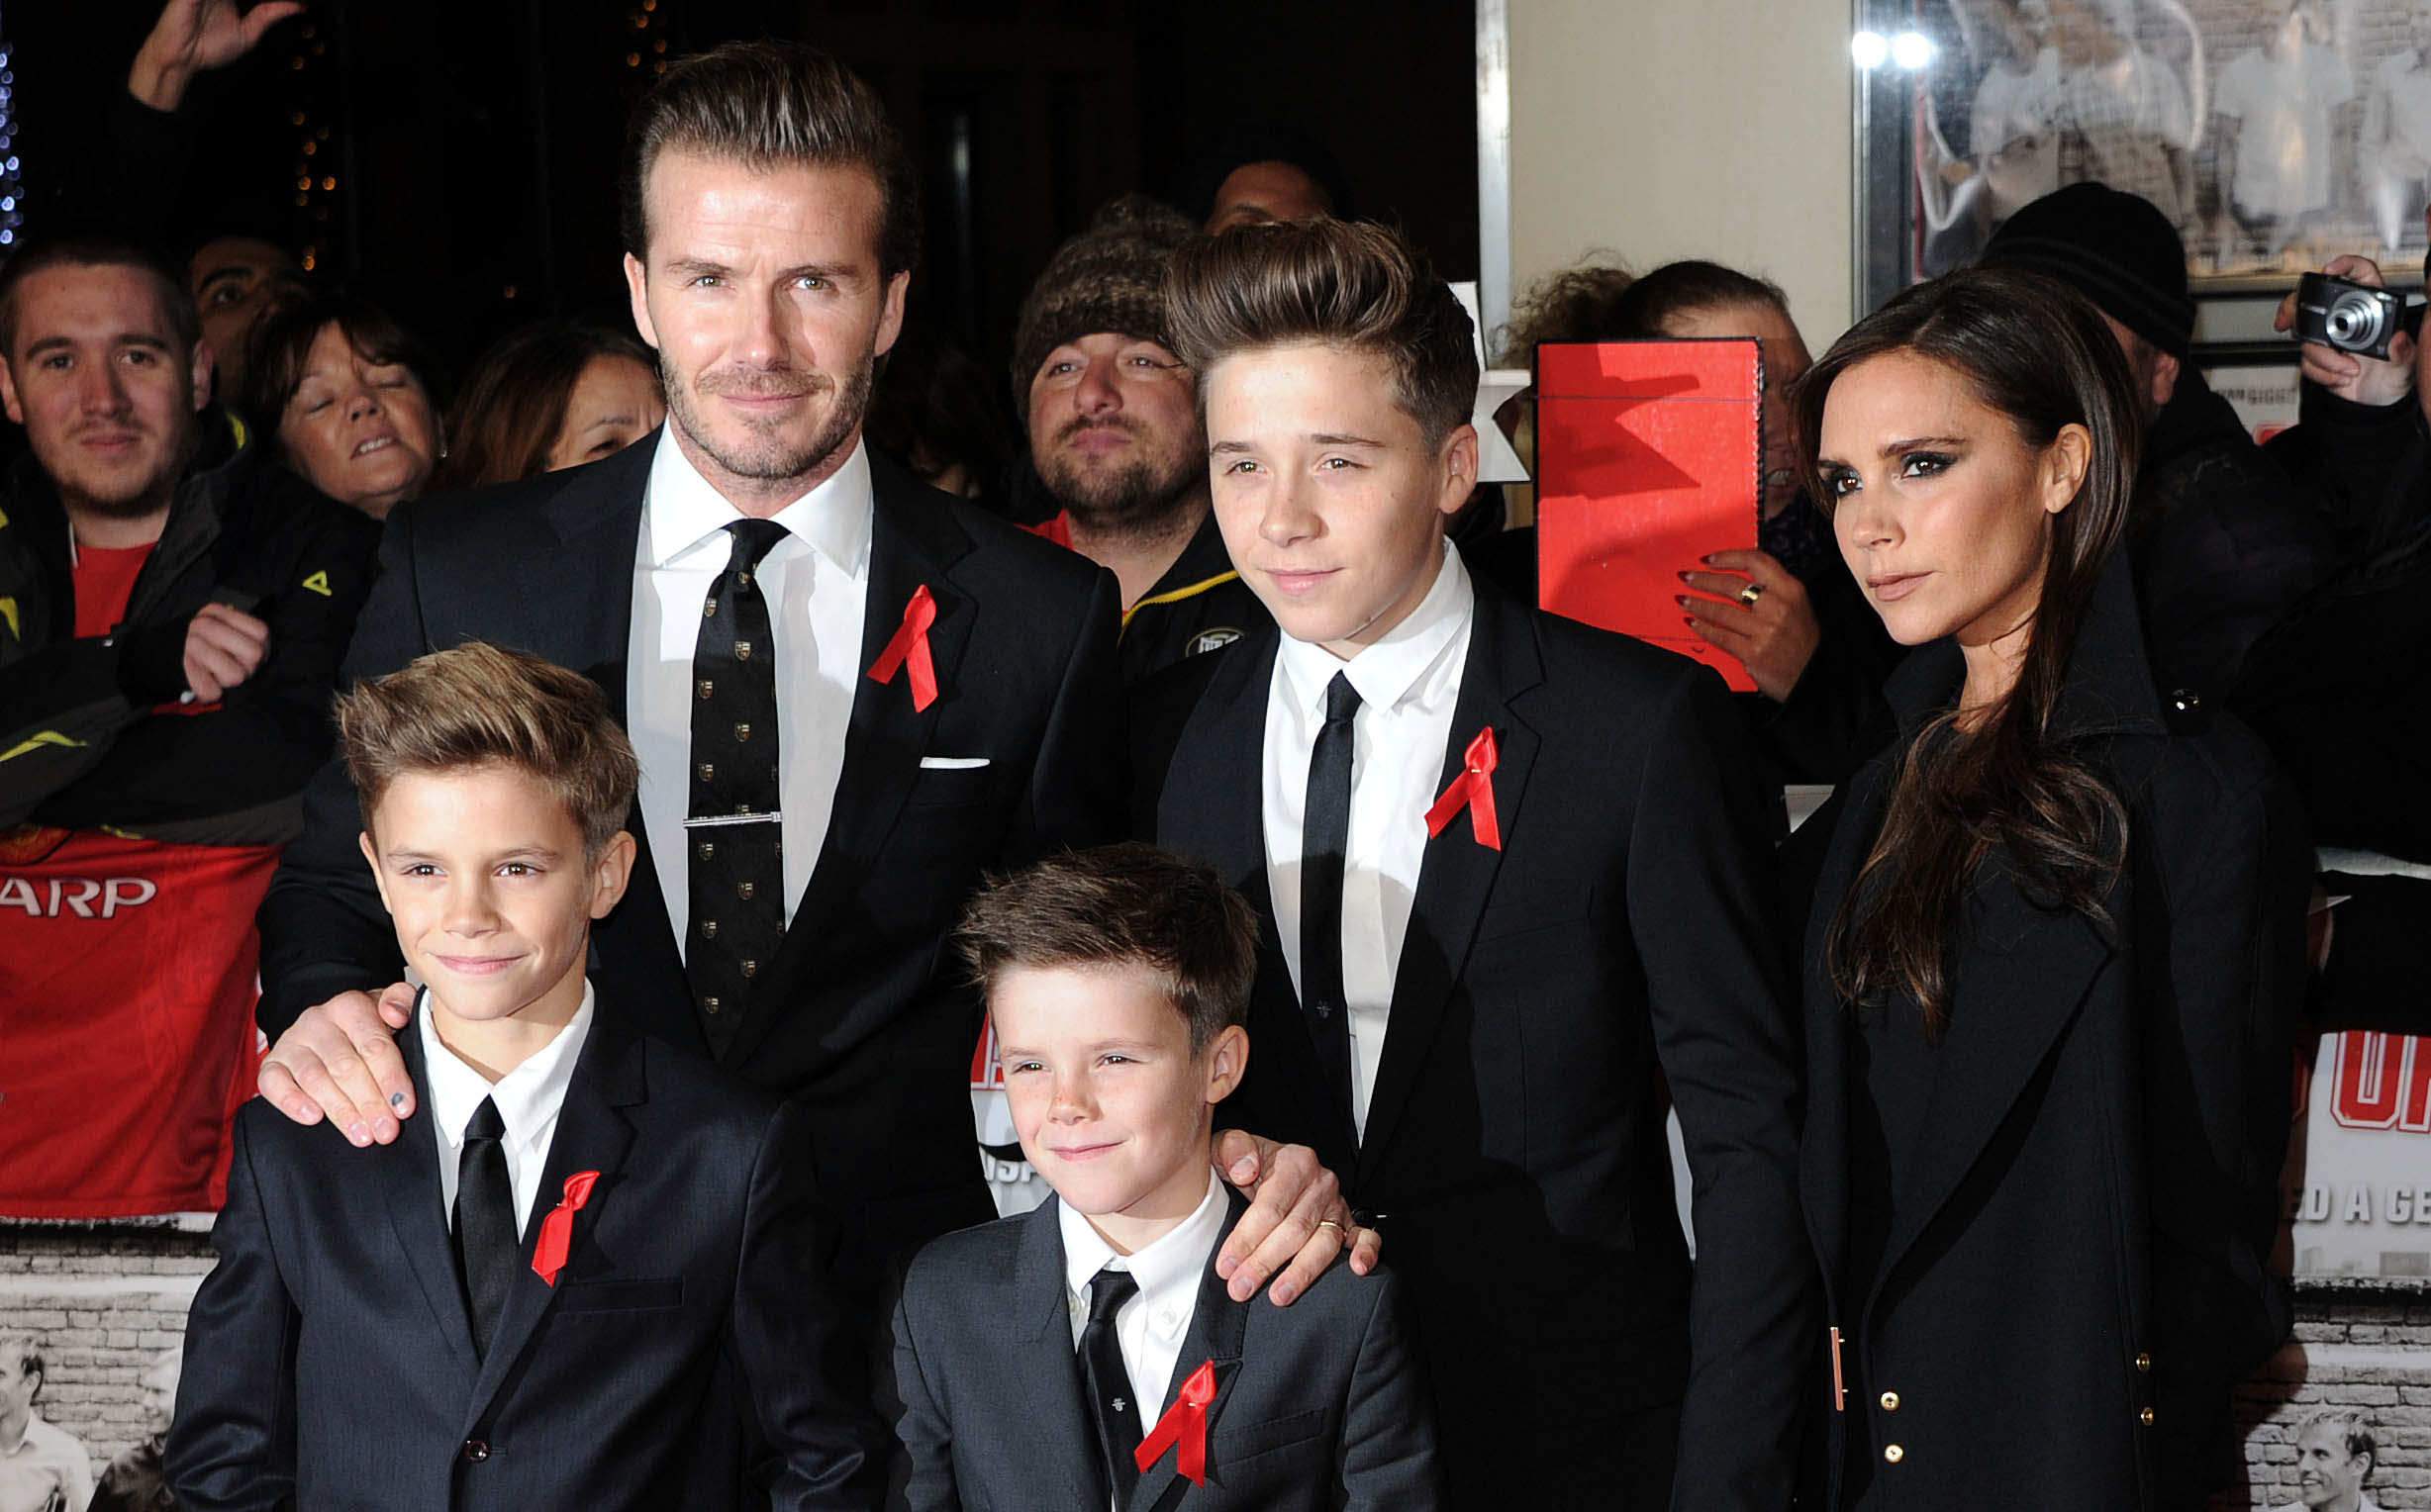 LONDON, UNITED KINGDOM - DECEMBER 01: (L-R) Romeo Beckham, David Beckham, Cruz Beckham, Brooklyn Beckham and Victoria Beckham attend the World premiere of 